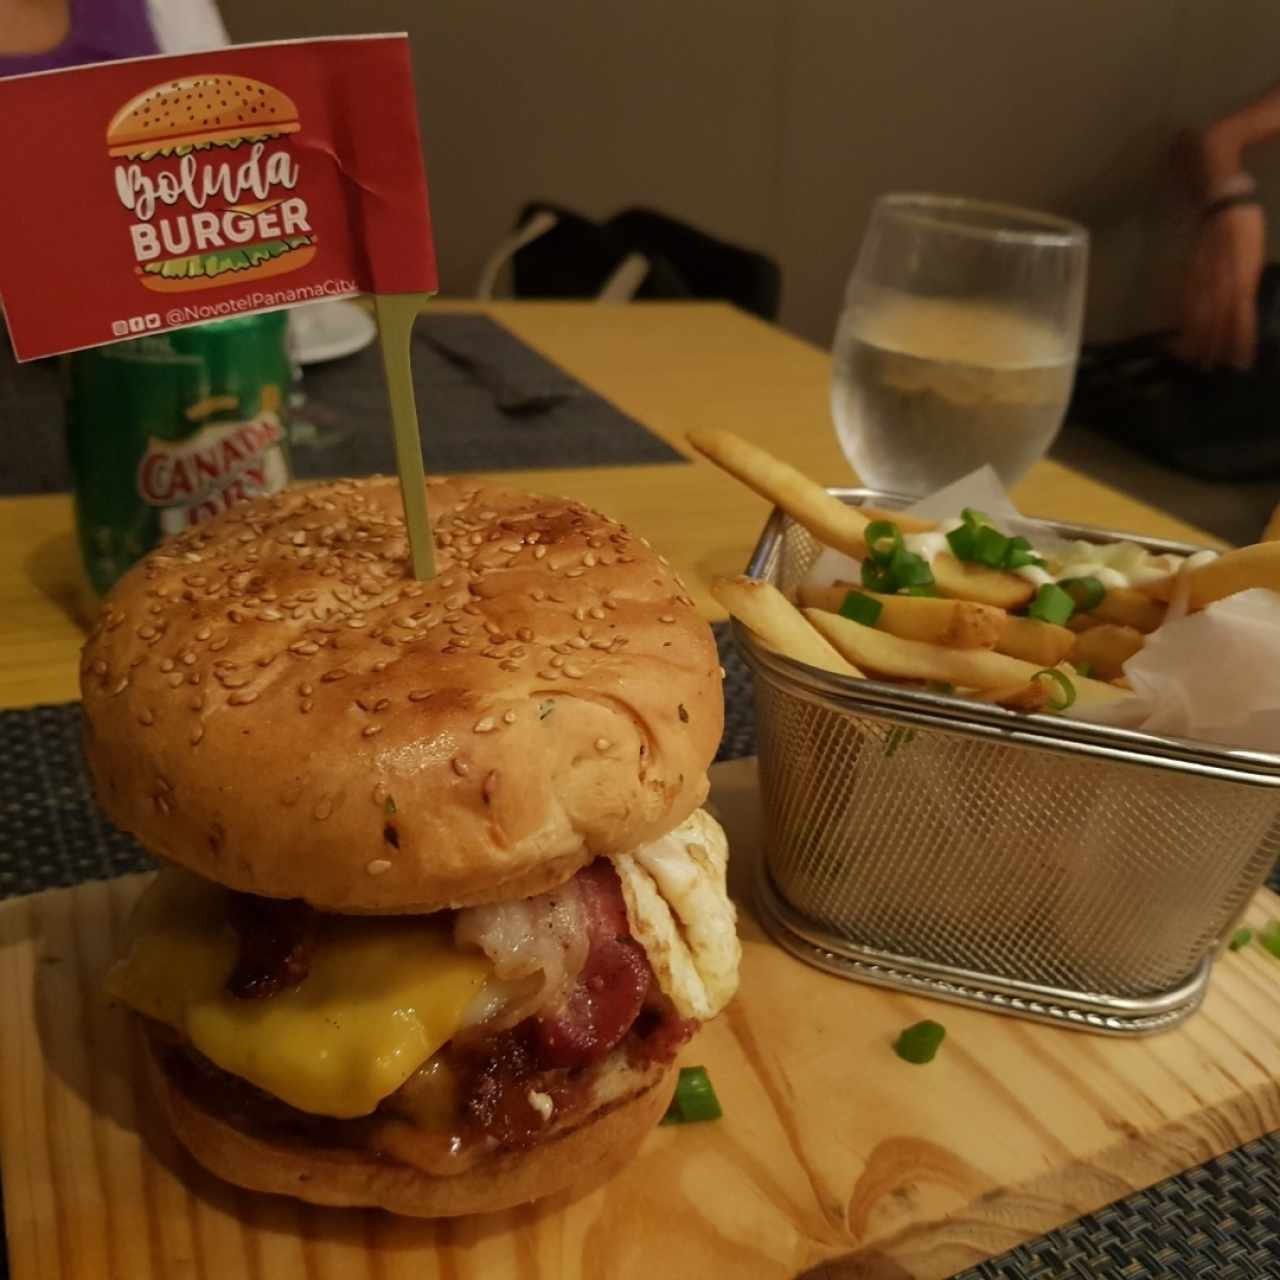 Boluda Burger